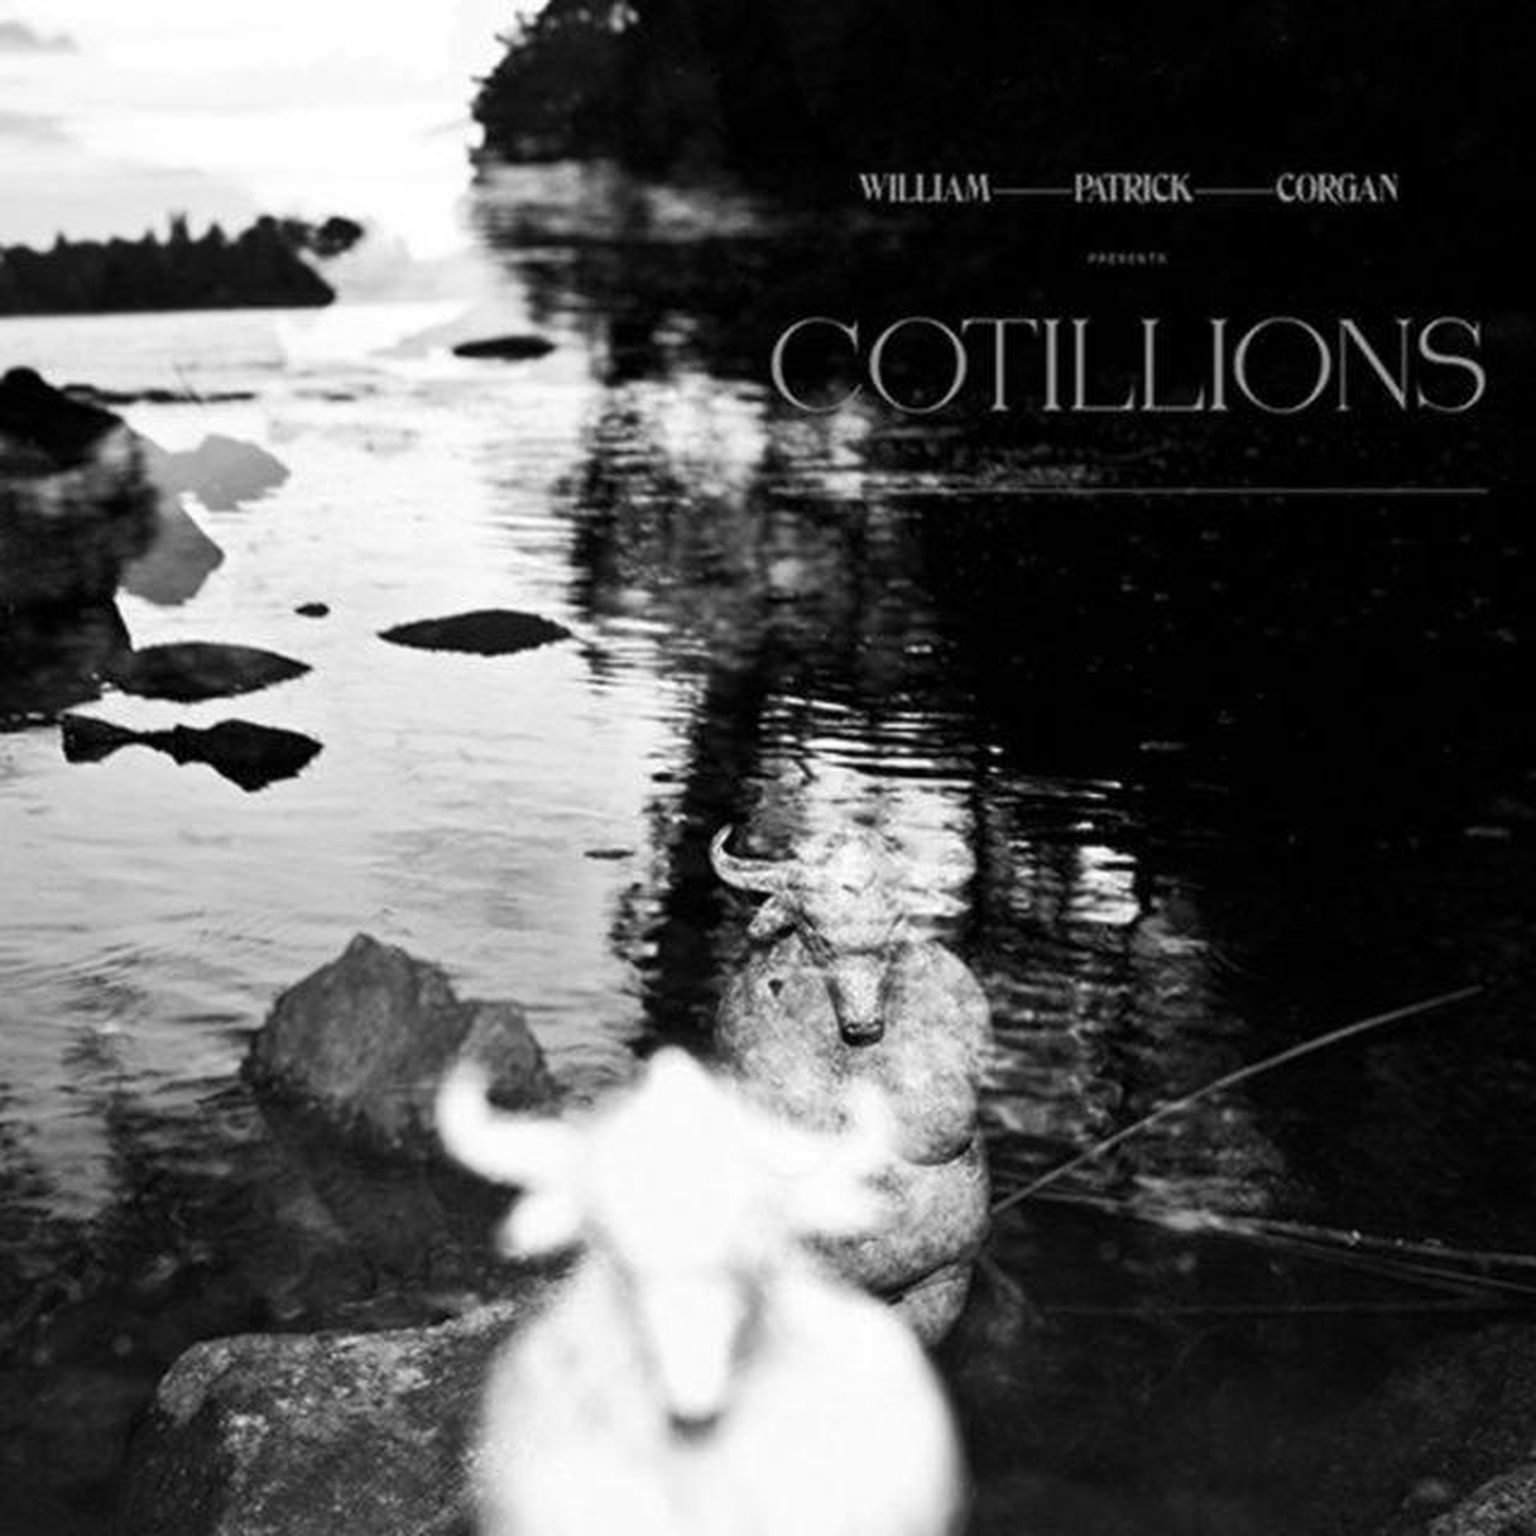 William Patrick Corgan
„Cotillions“